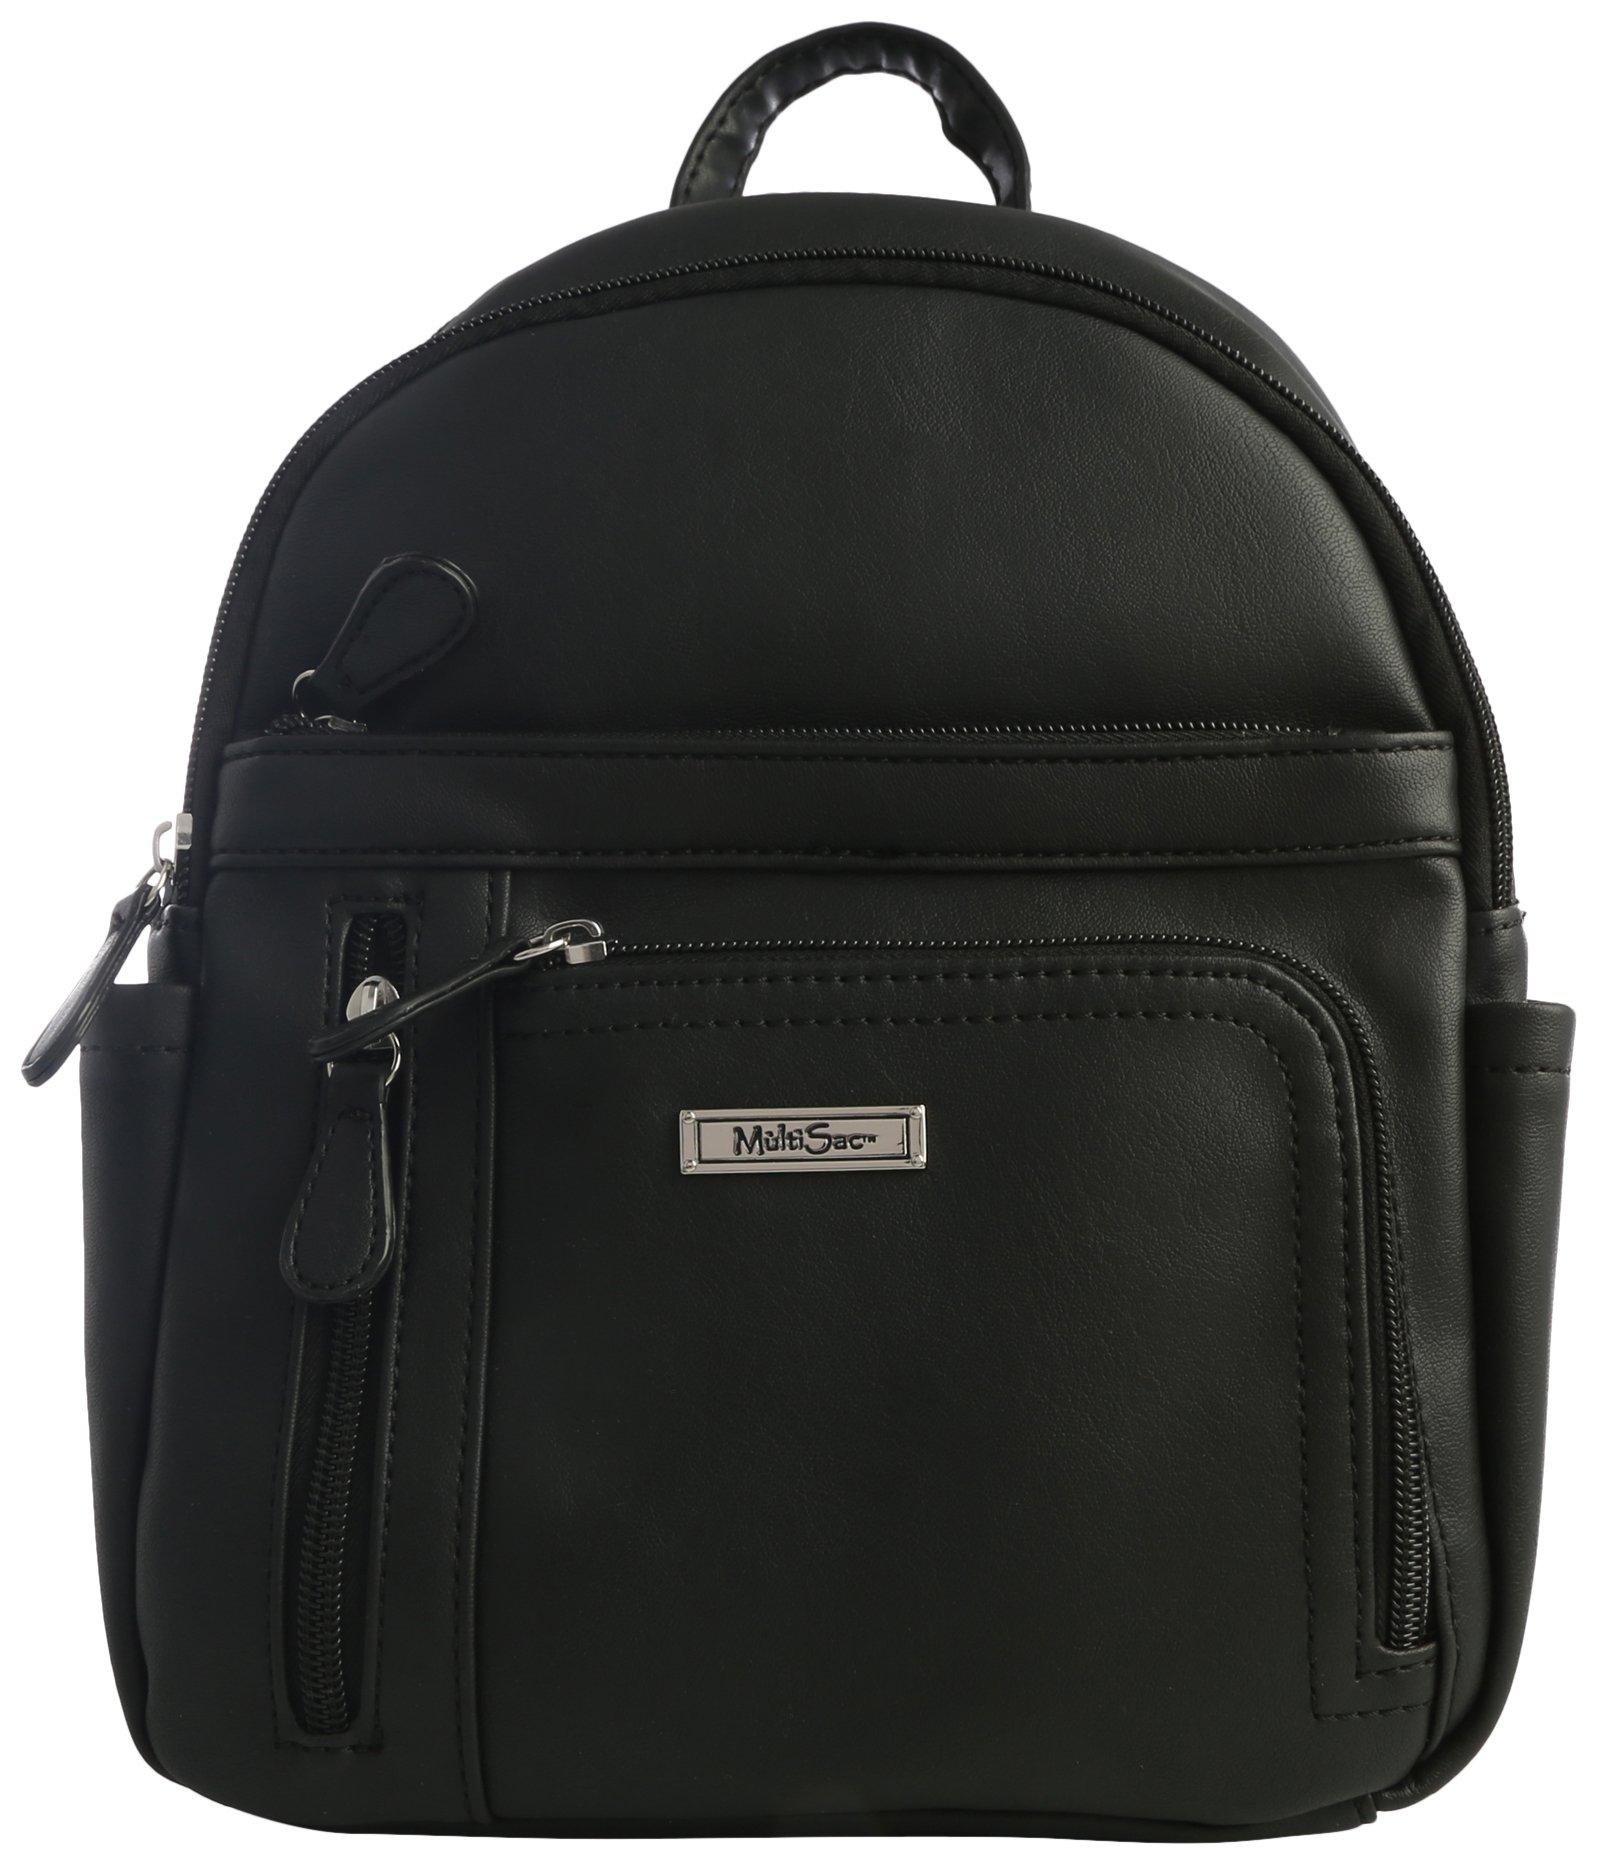 MultiSac Adele Solid Vegan Leather Backpack